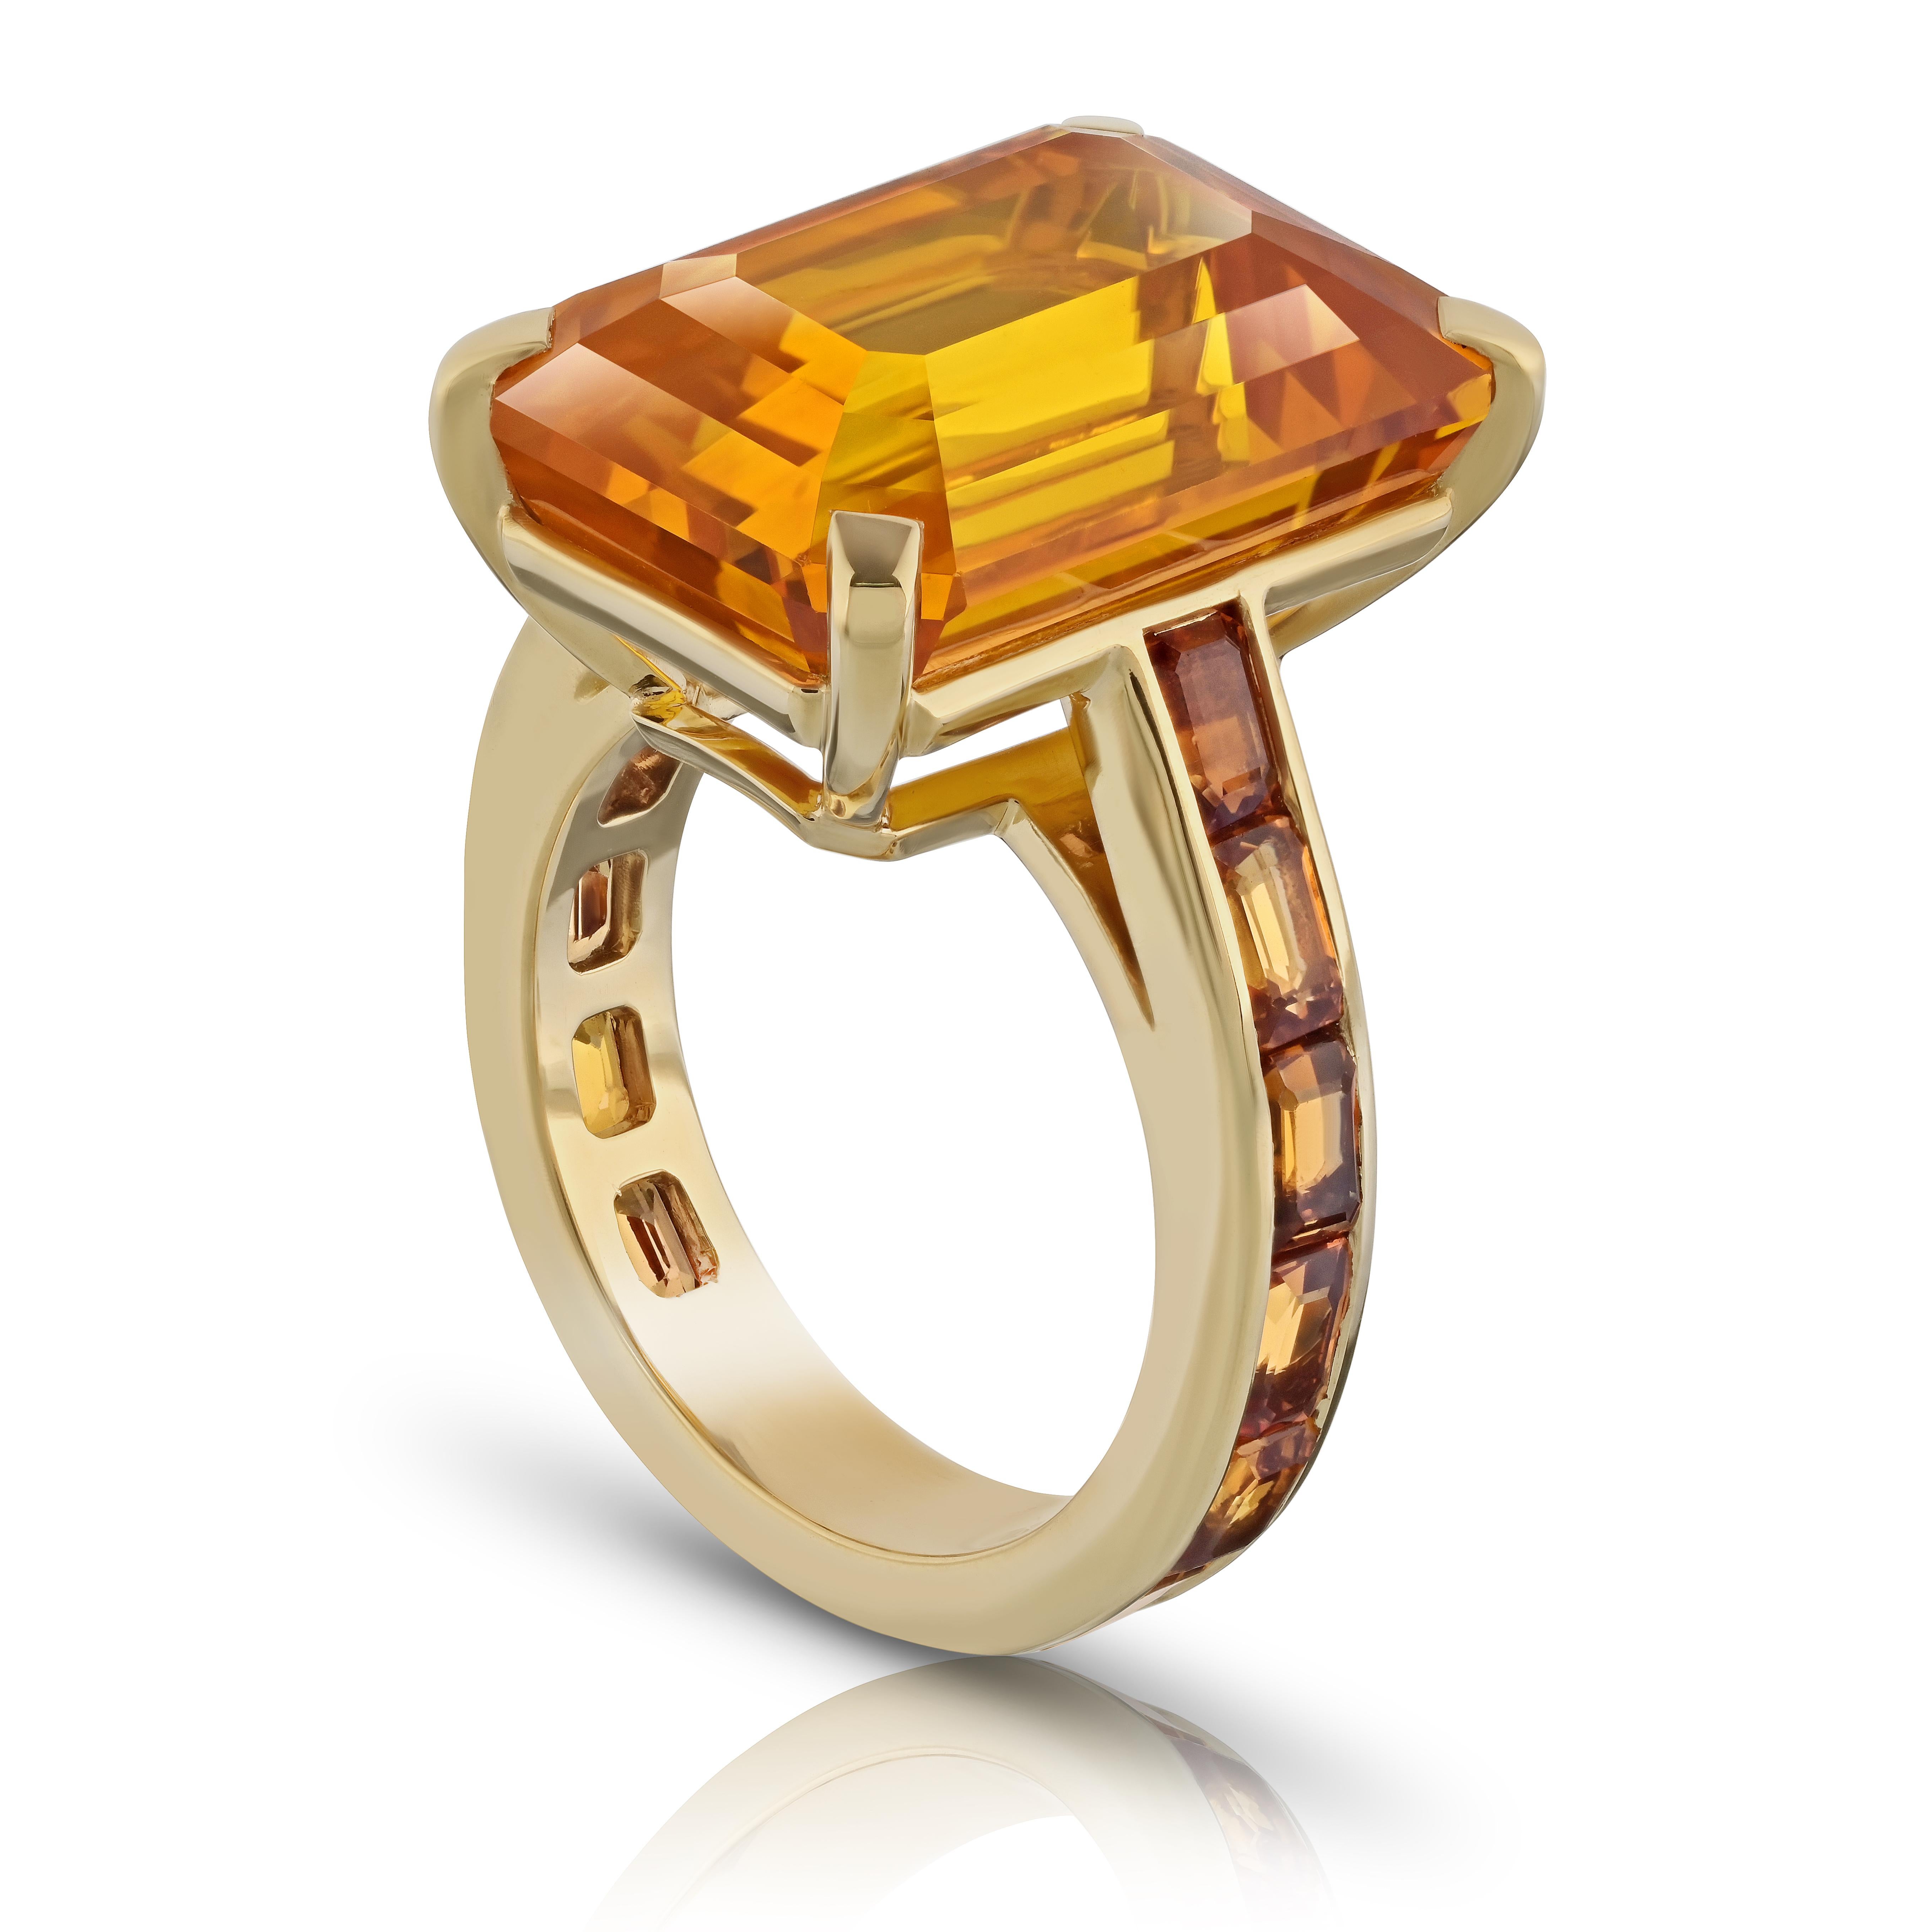 21.05 carat Emerald Orange Sapphire with two Emerald Cut Sapphires  set in a handmade Platinum & YG ring